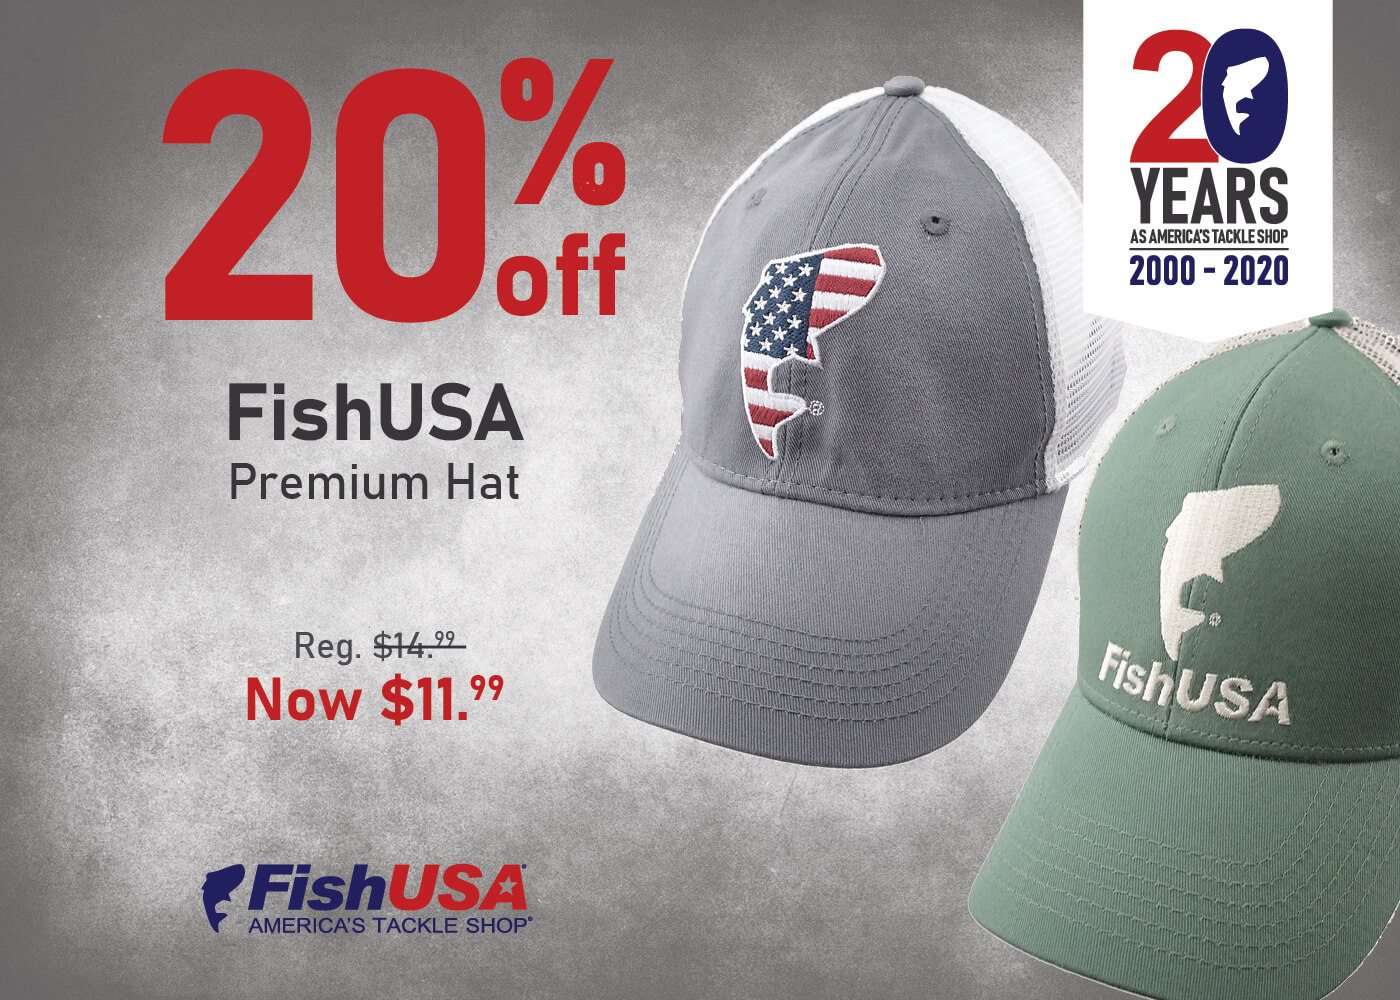 Save 20% on the FishUSA Premium Hat